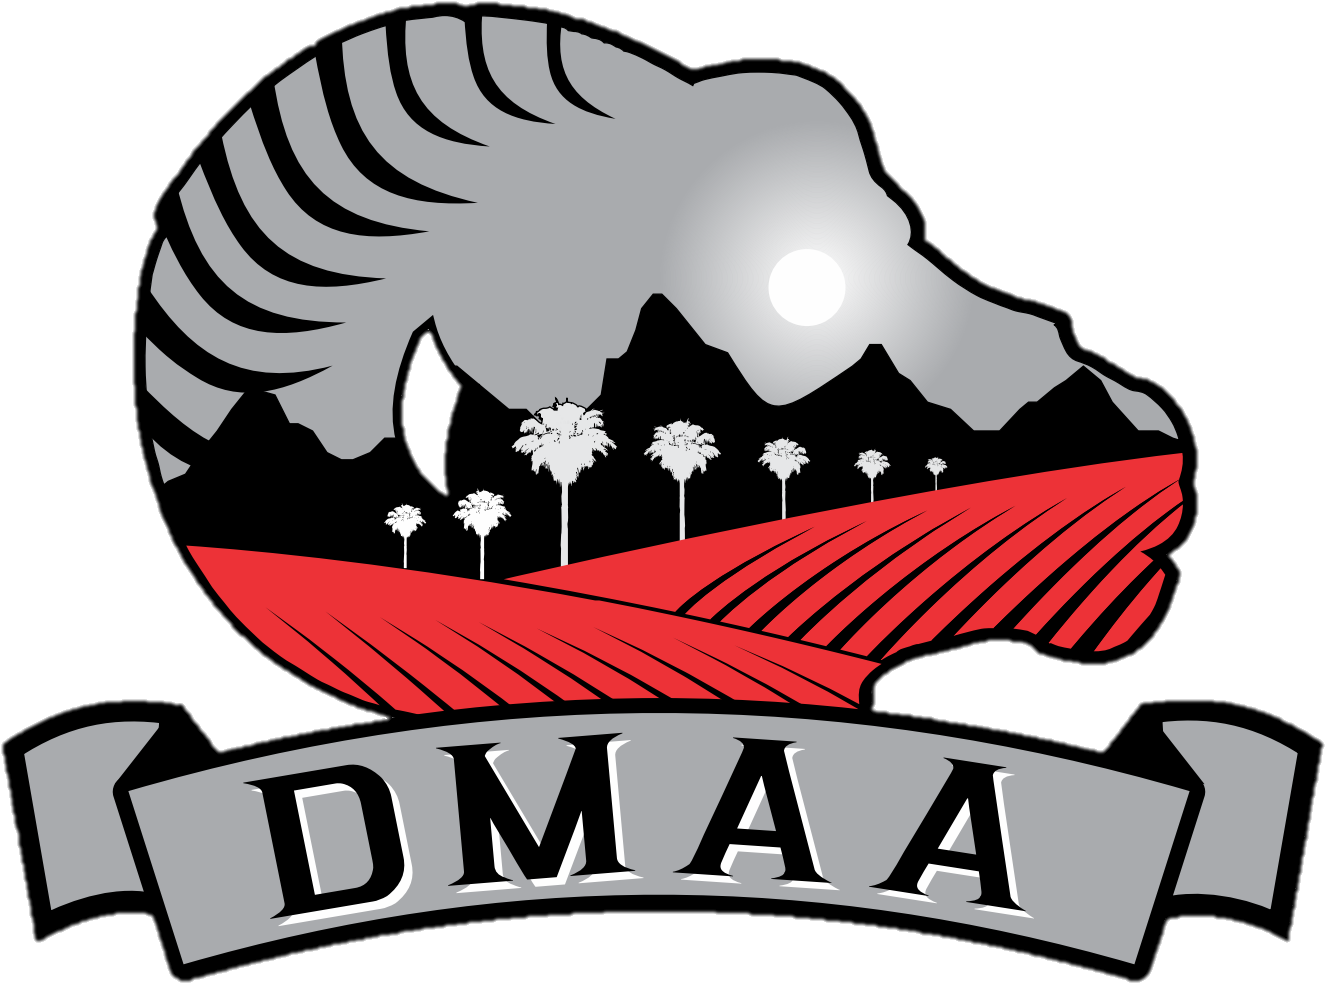 Desert Mirage Alumni Association - Alumni Association (1920x1080)